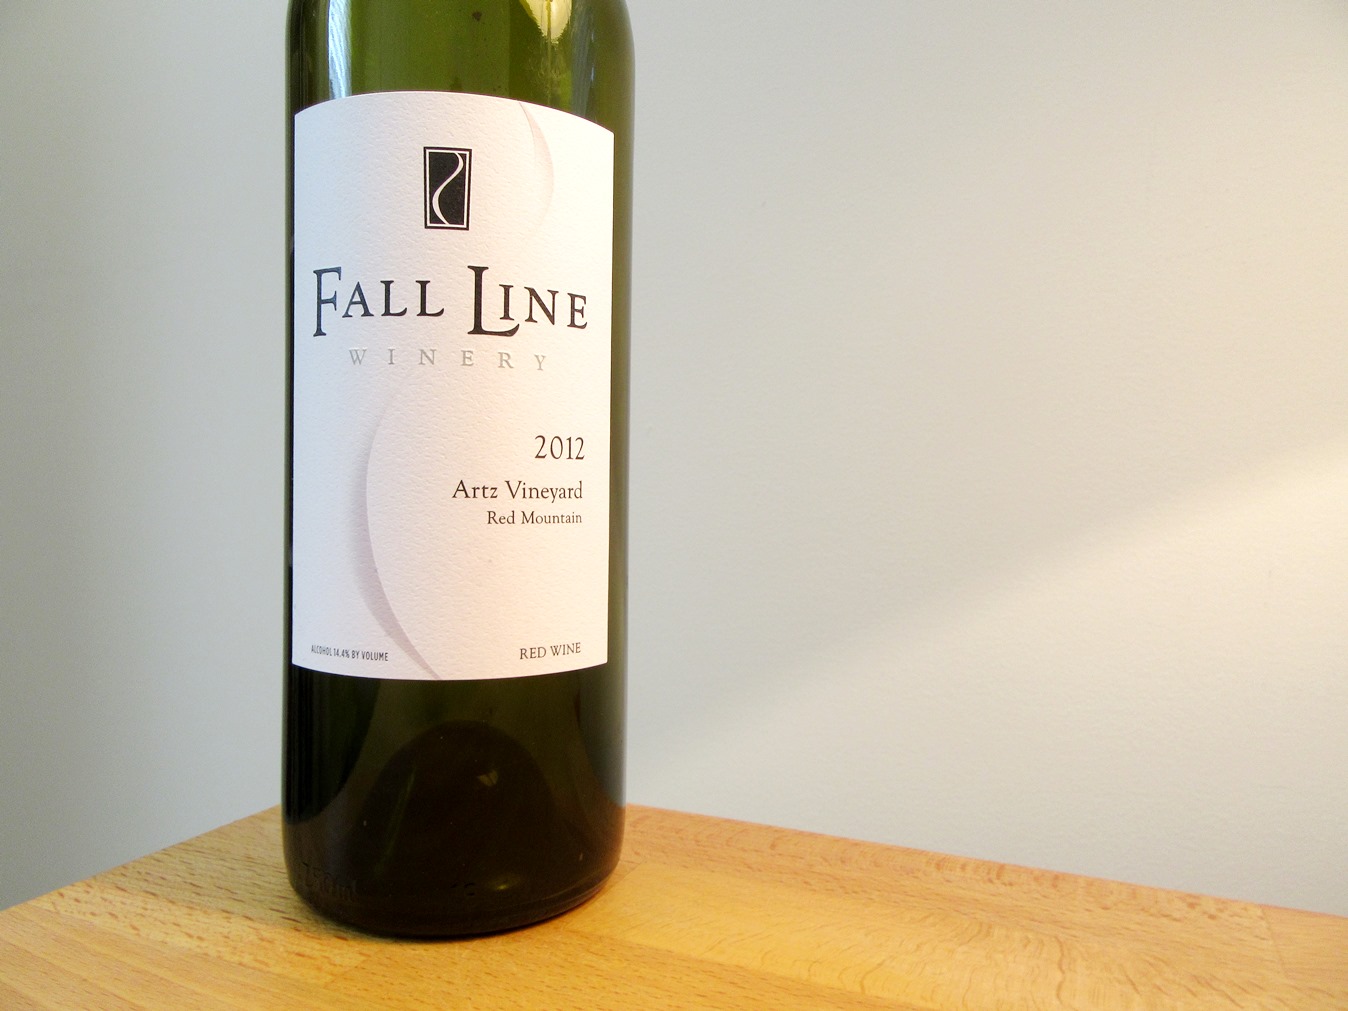 Fall Line Winery, Artz Vineyard 2012, Red Mountain, Washington, Wine Casual